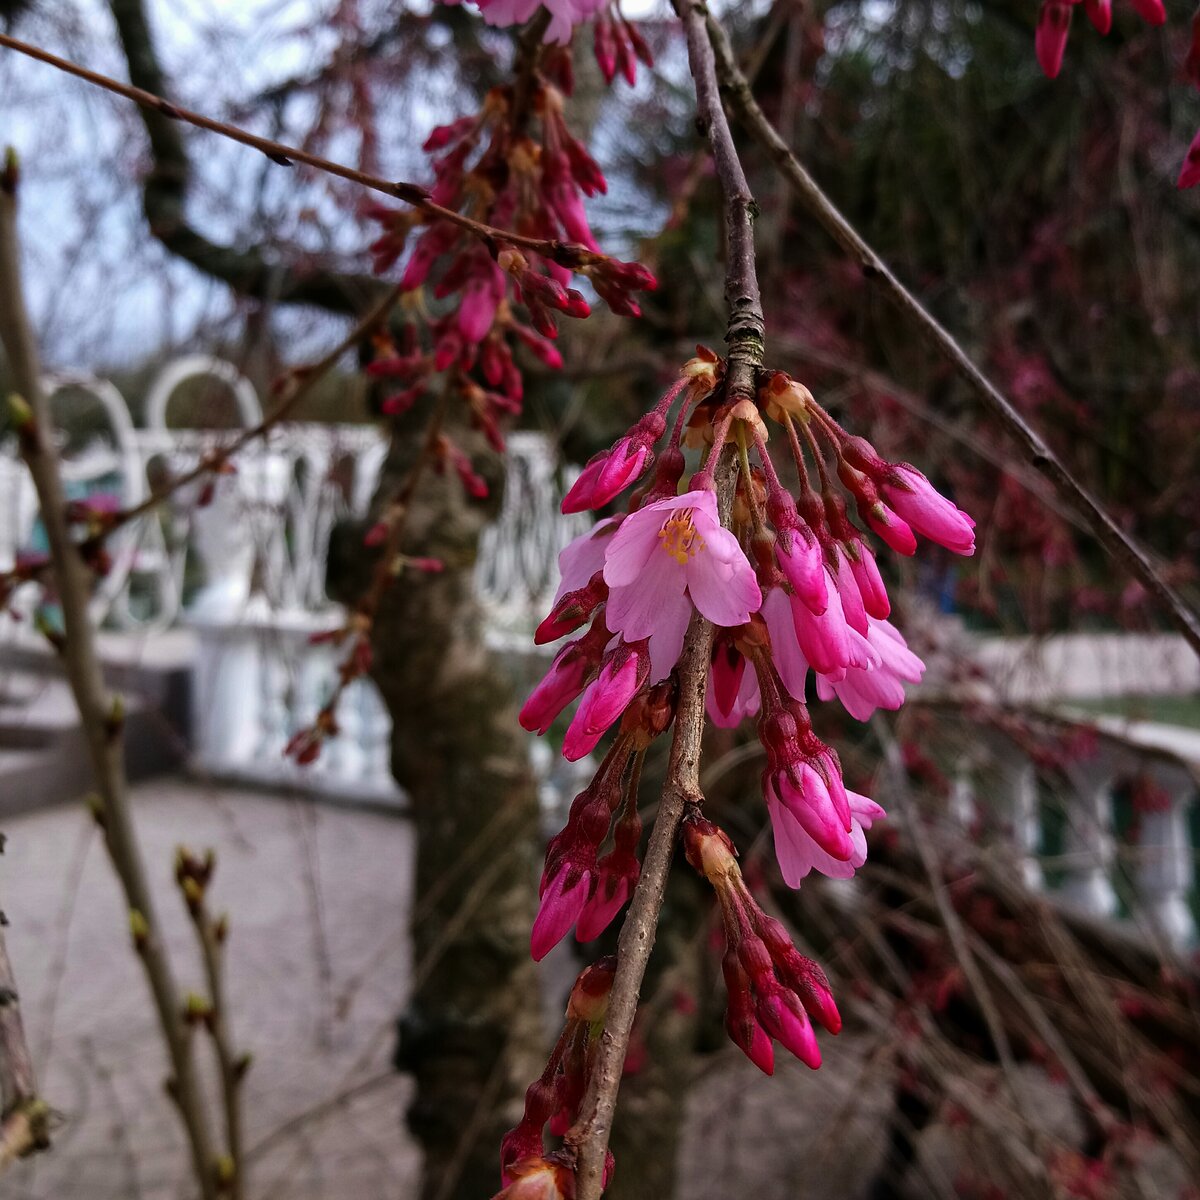 Дерево с розовыми цветами в сочи название фото